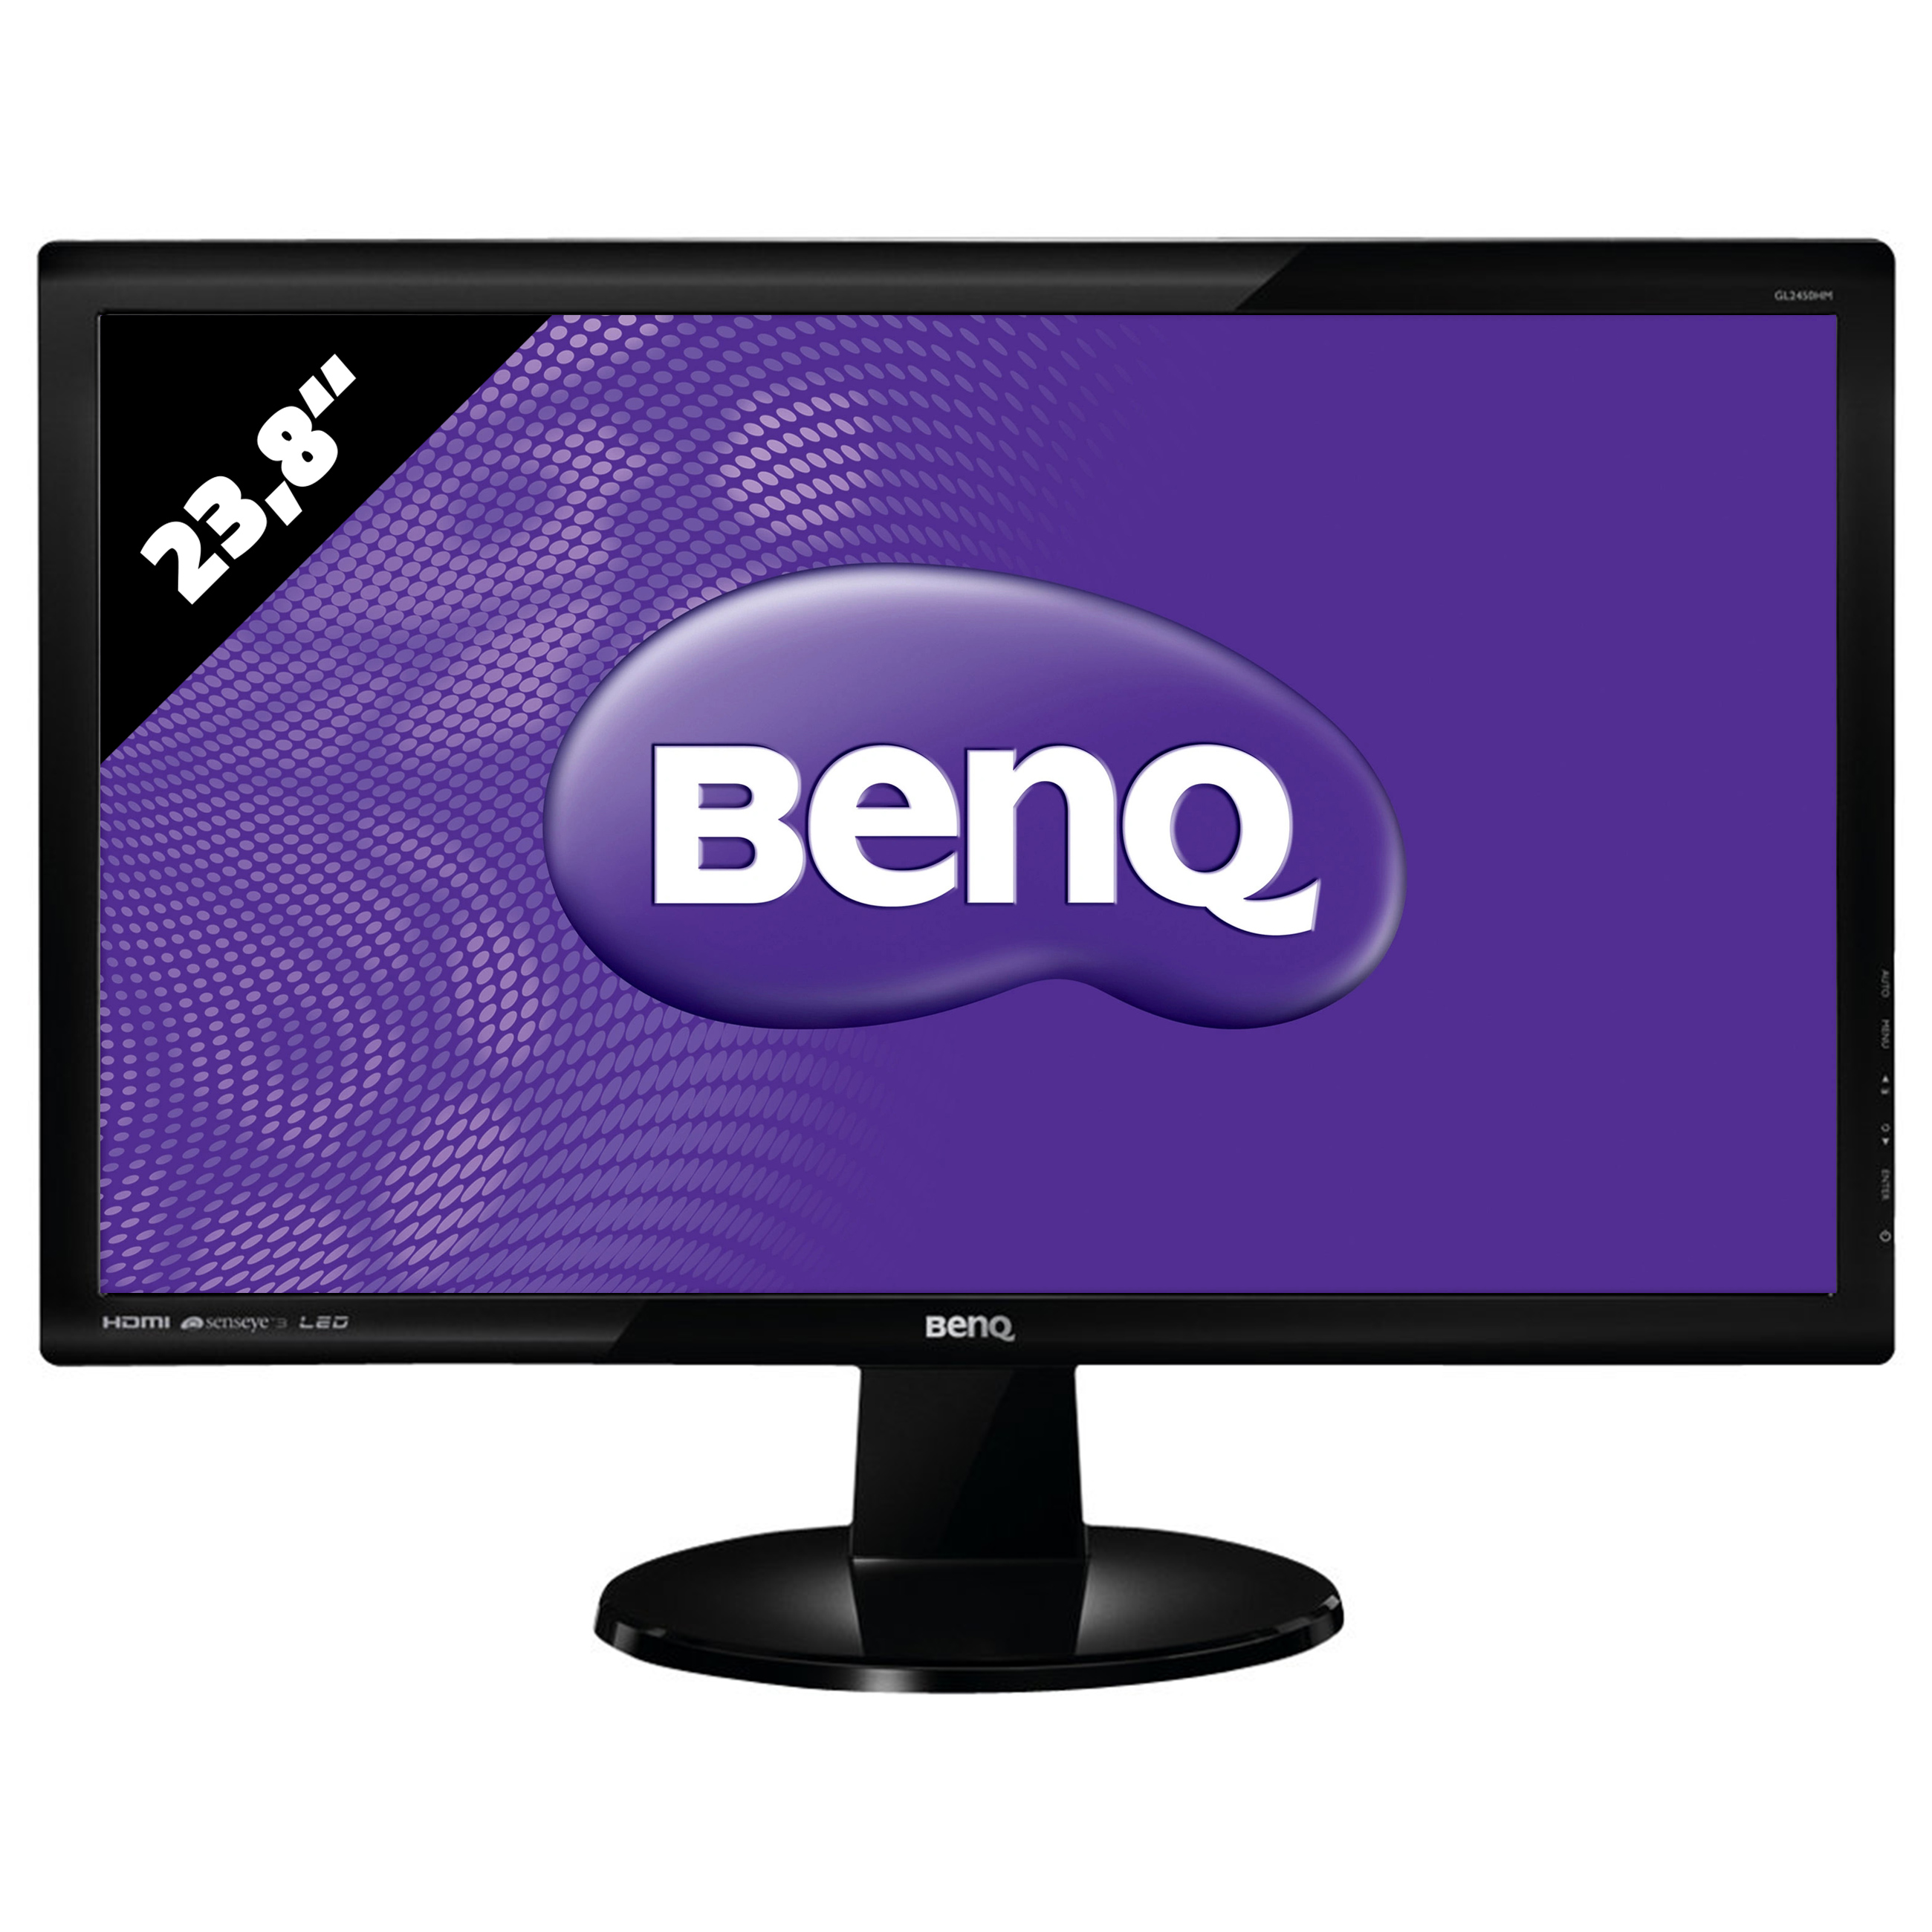 Benq LCD Monitor GL2450-B - 1920 x 1080 - FHD